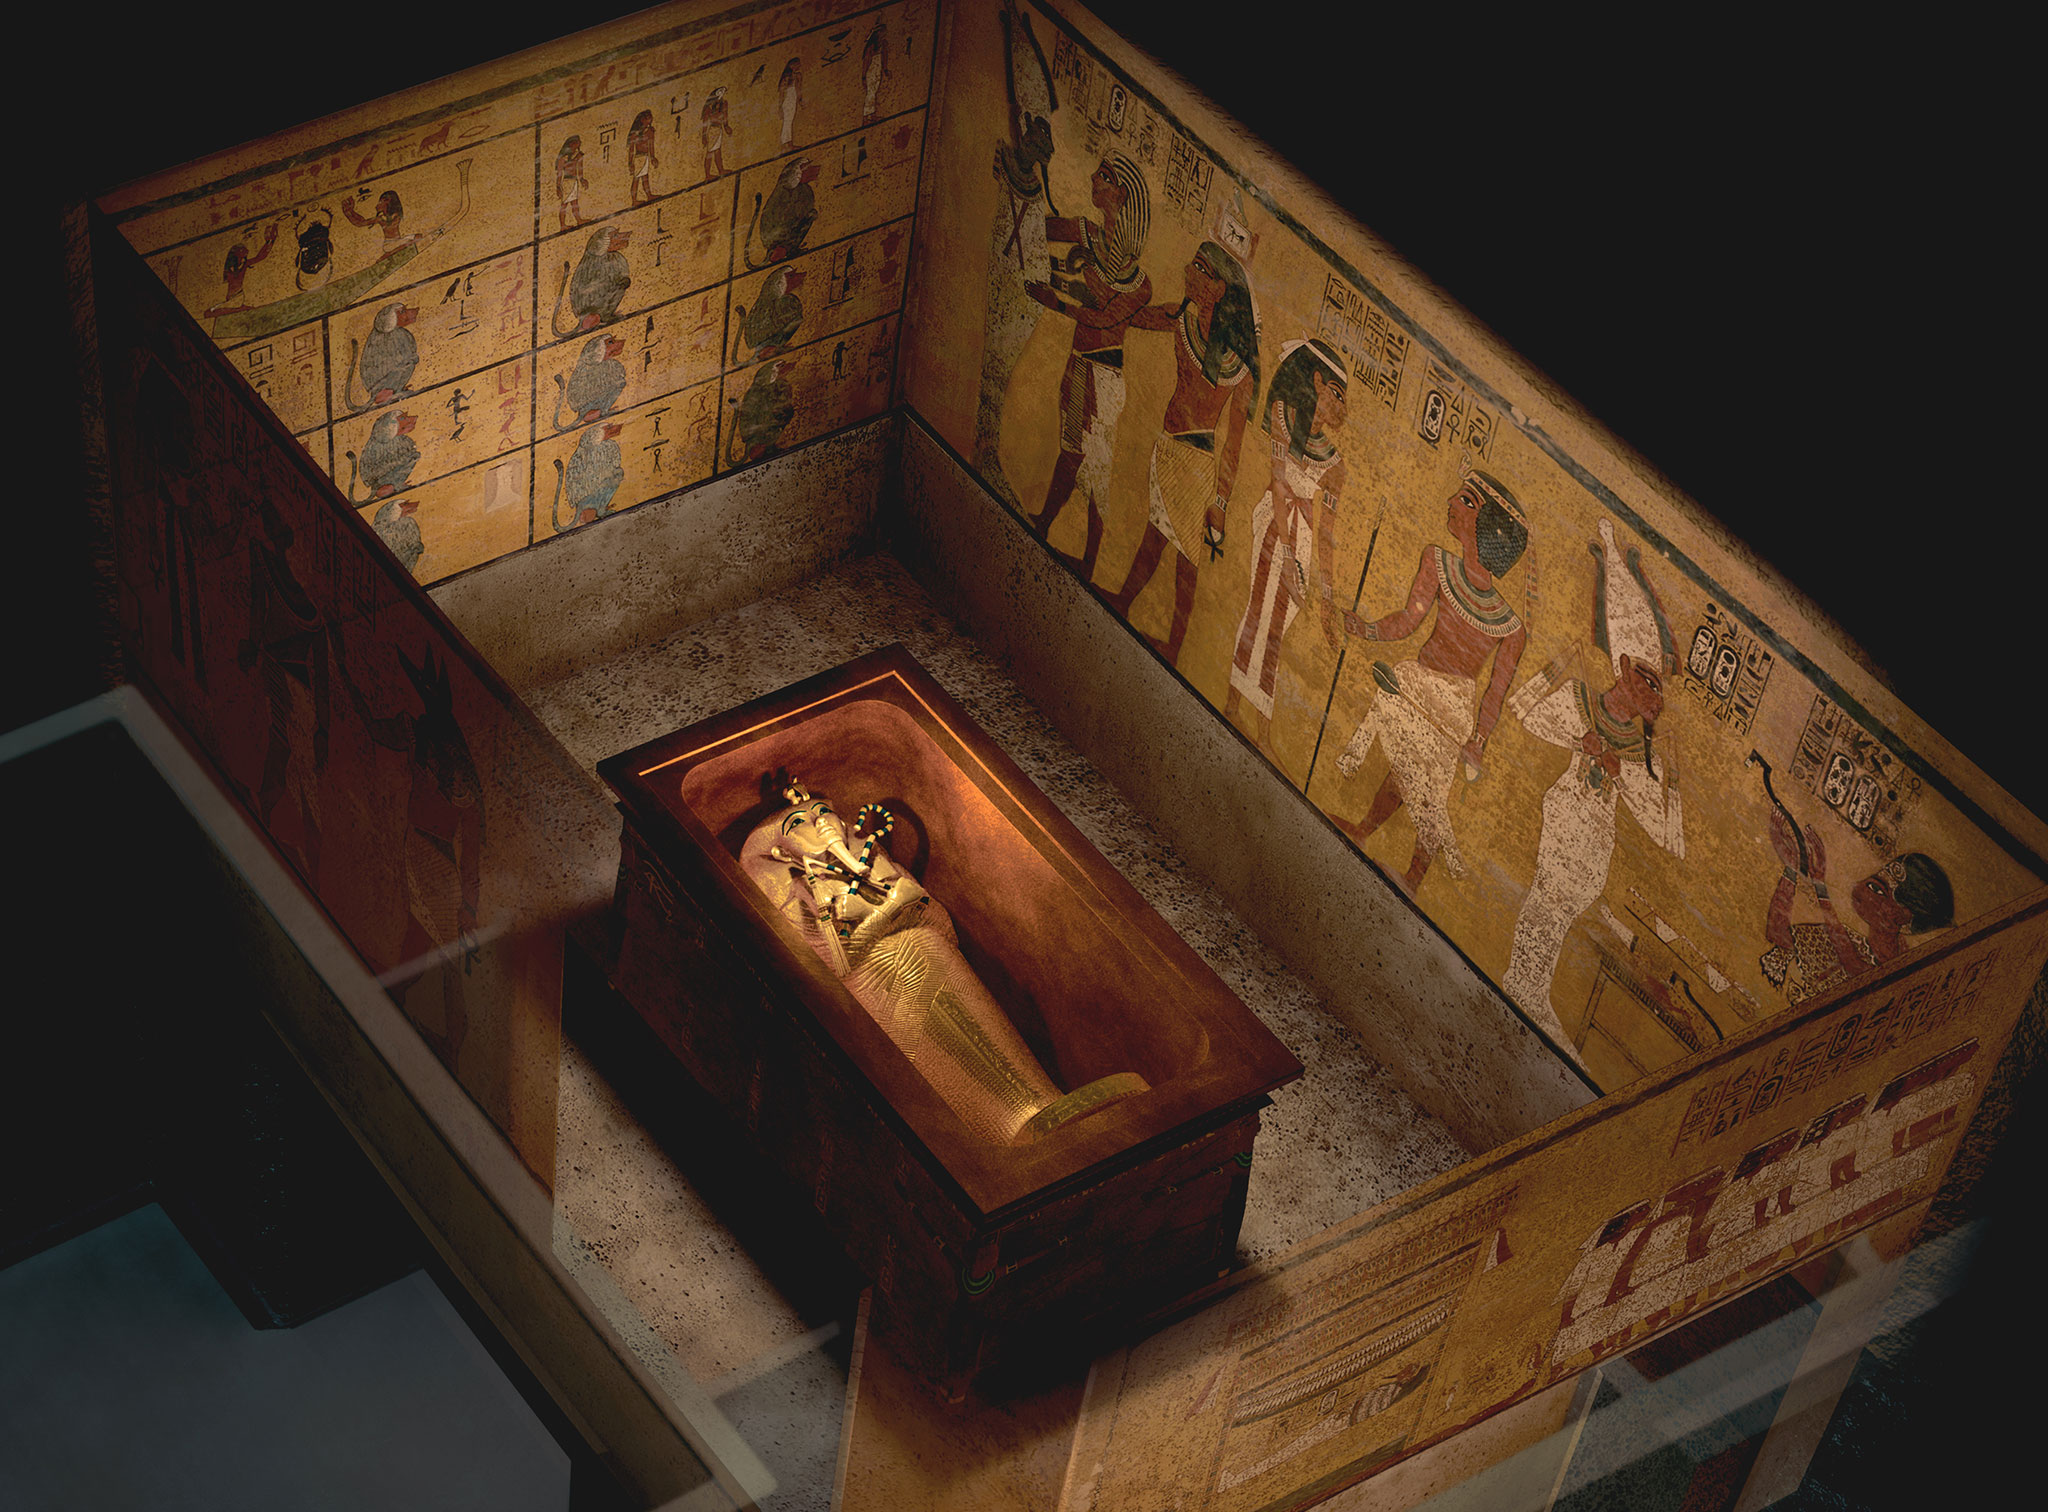 Inspection of King Tut's Tomb Reveals Hints of Hidden Chambers